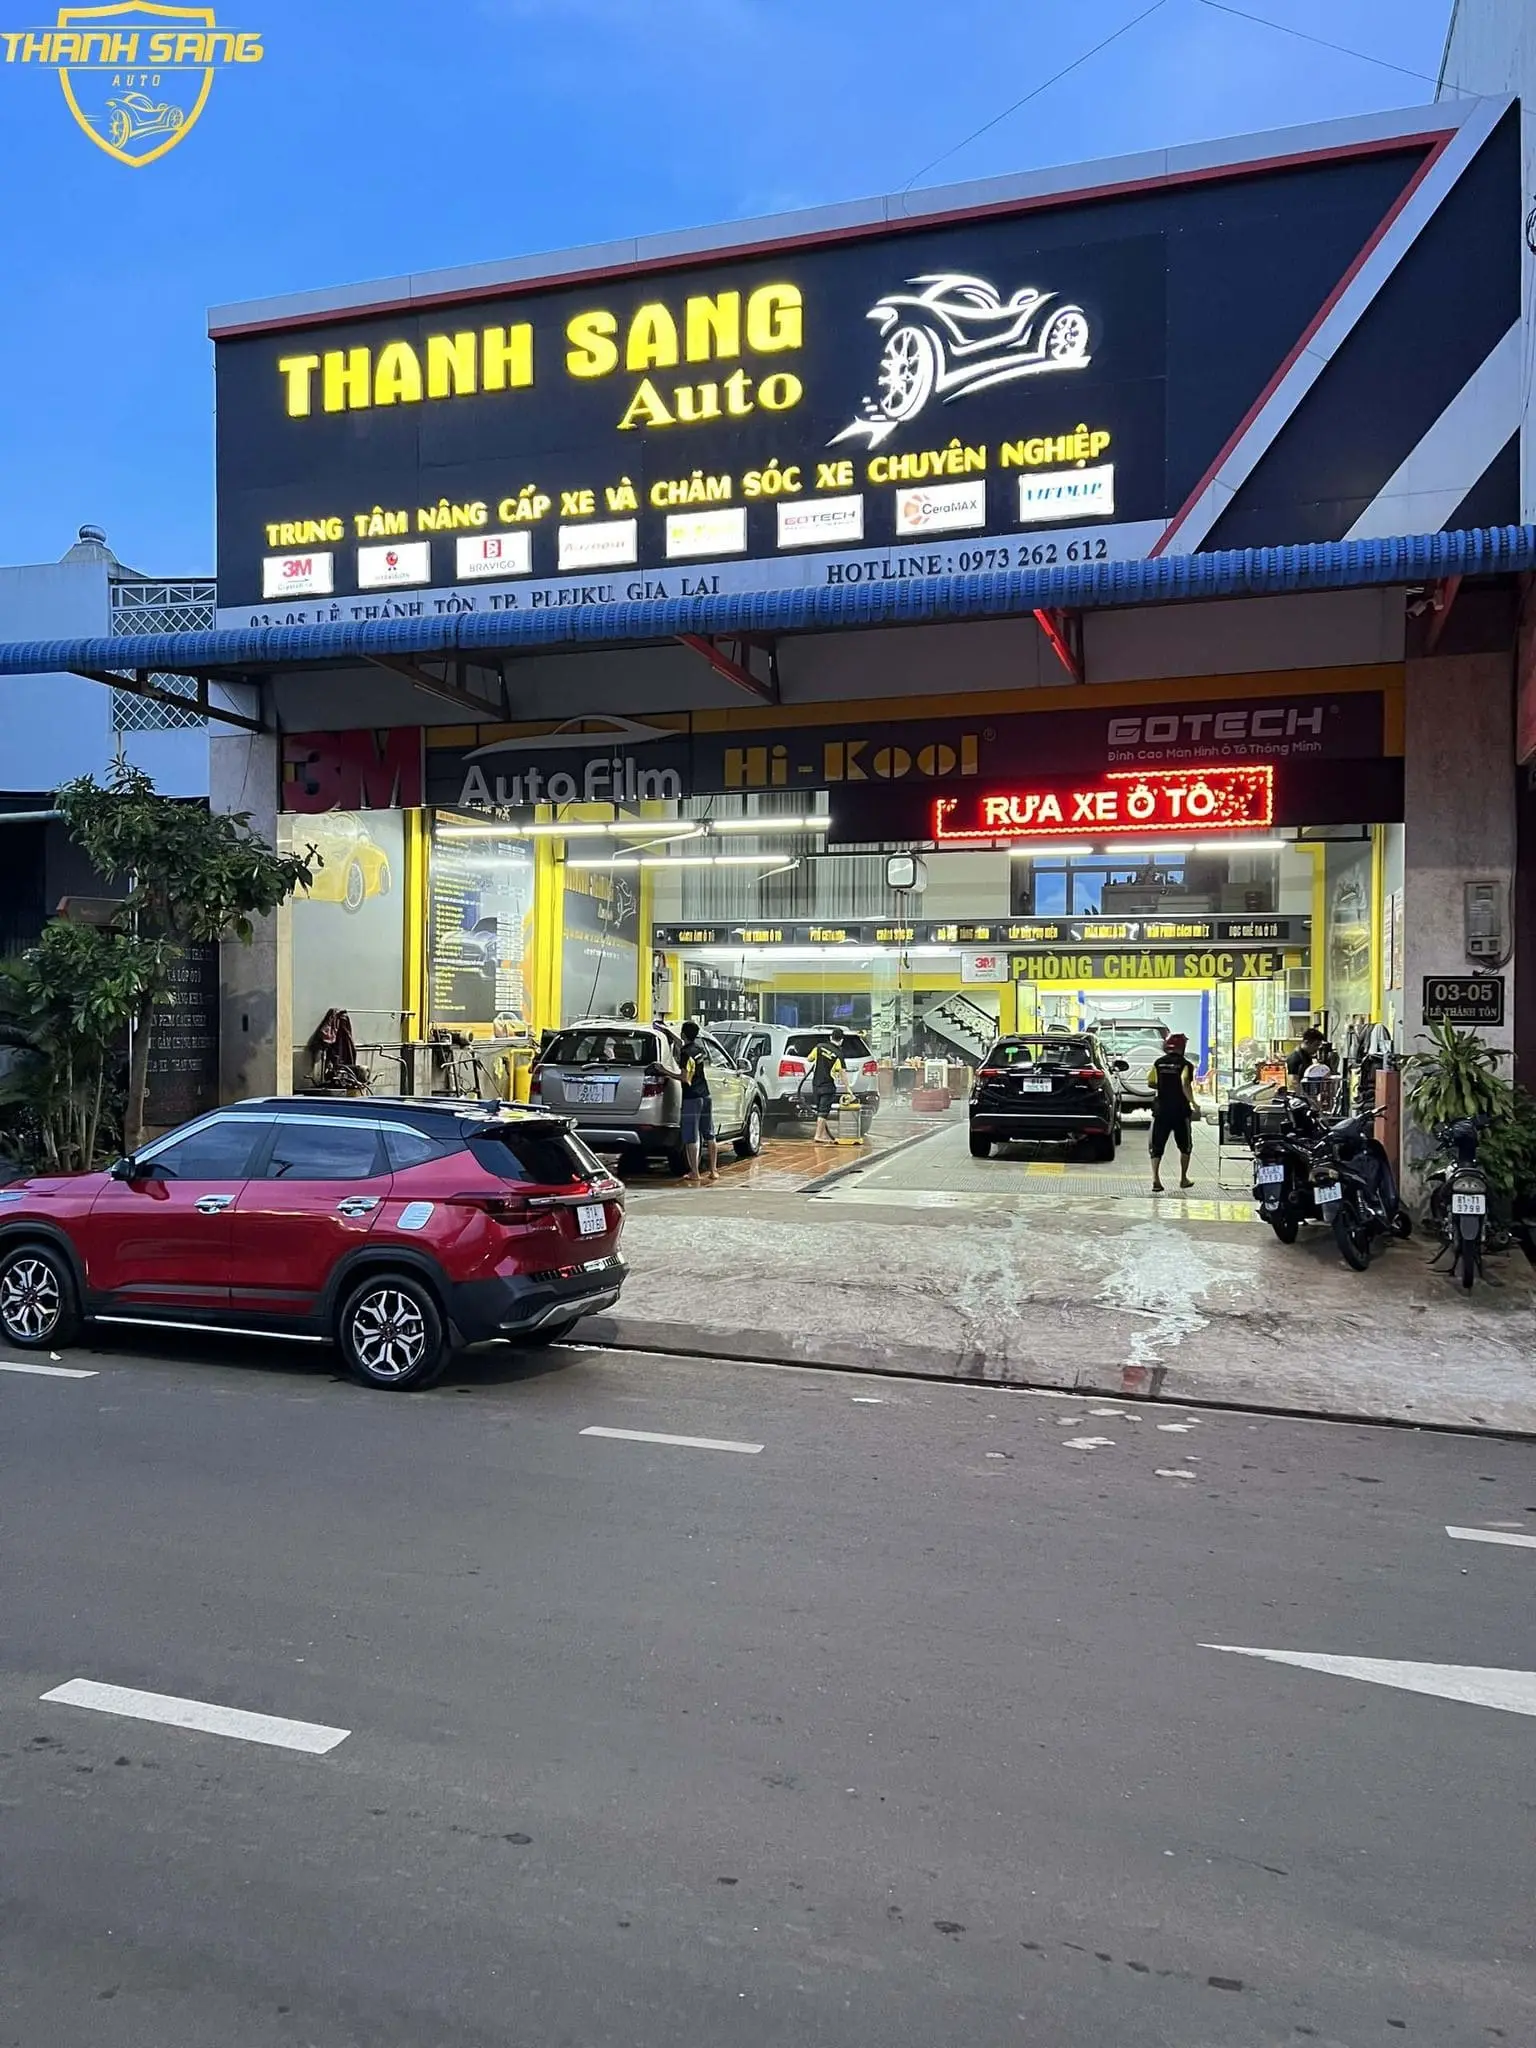  Thanh Sang Auto